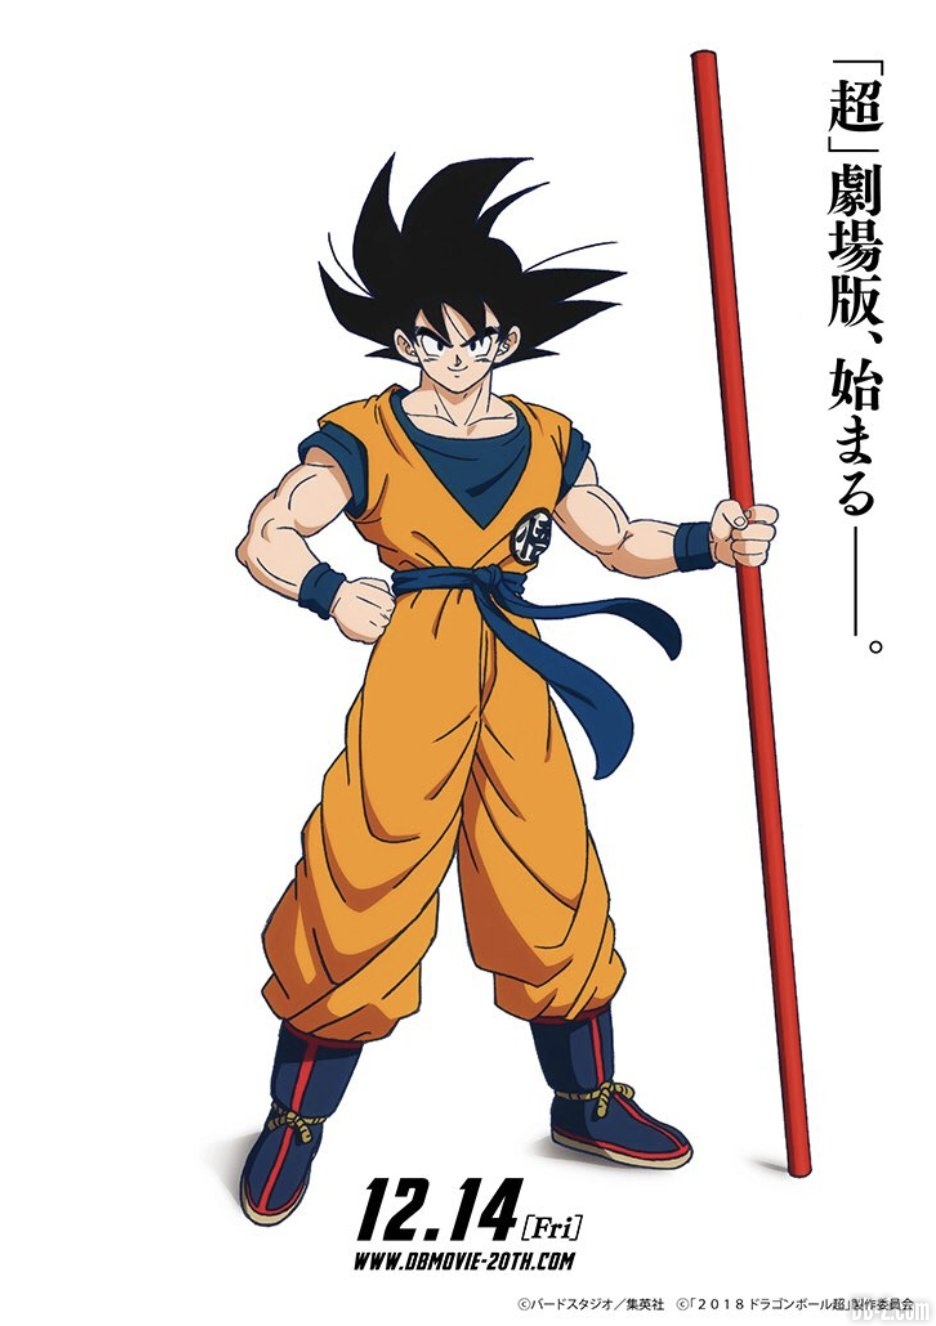 Poster de Goku Dragon Ball Super - The 20th film